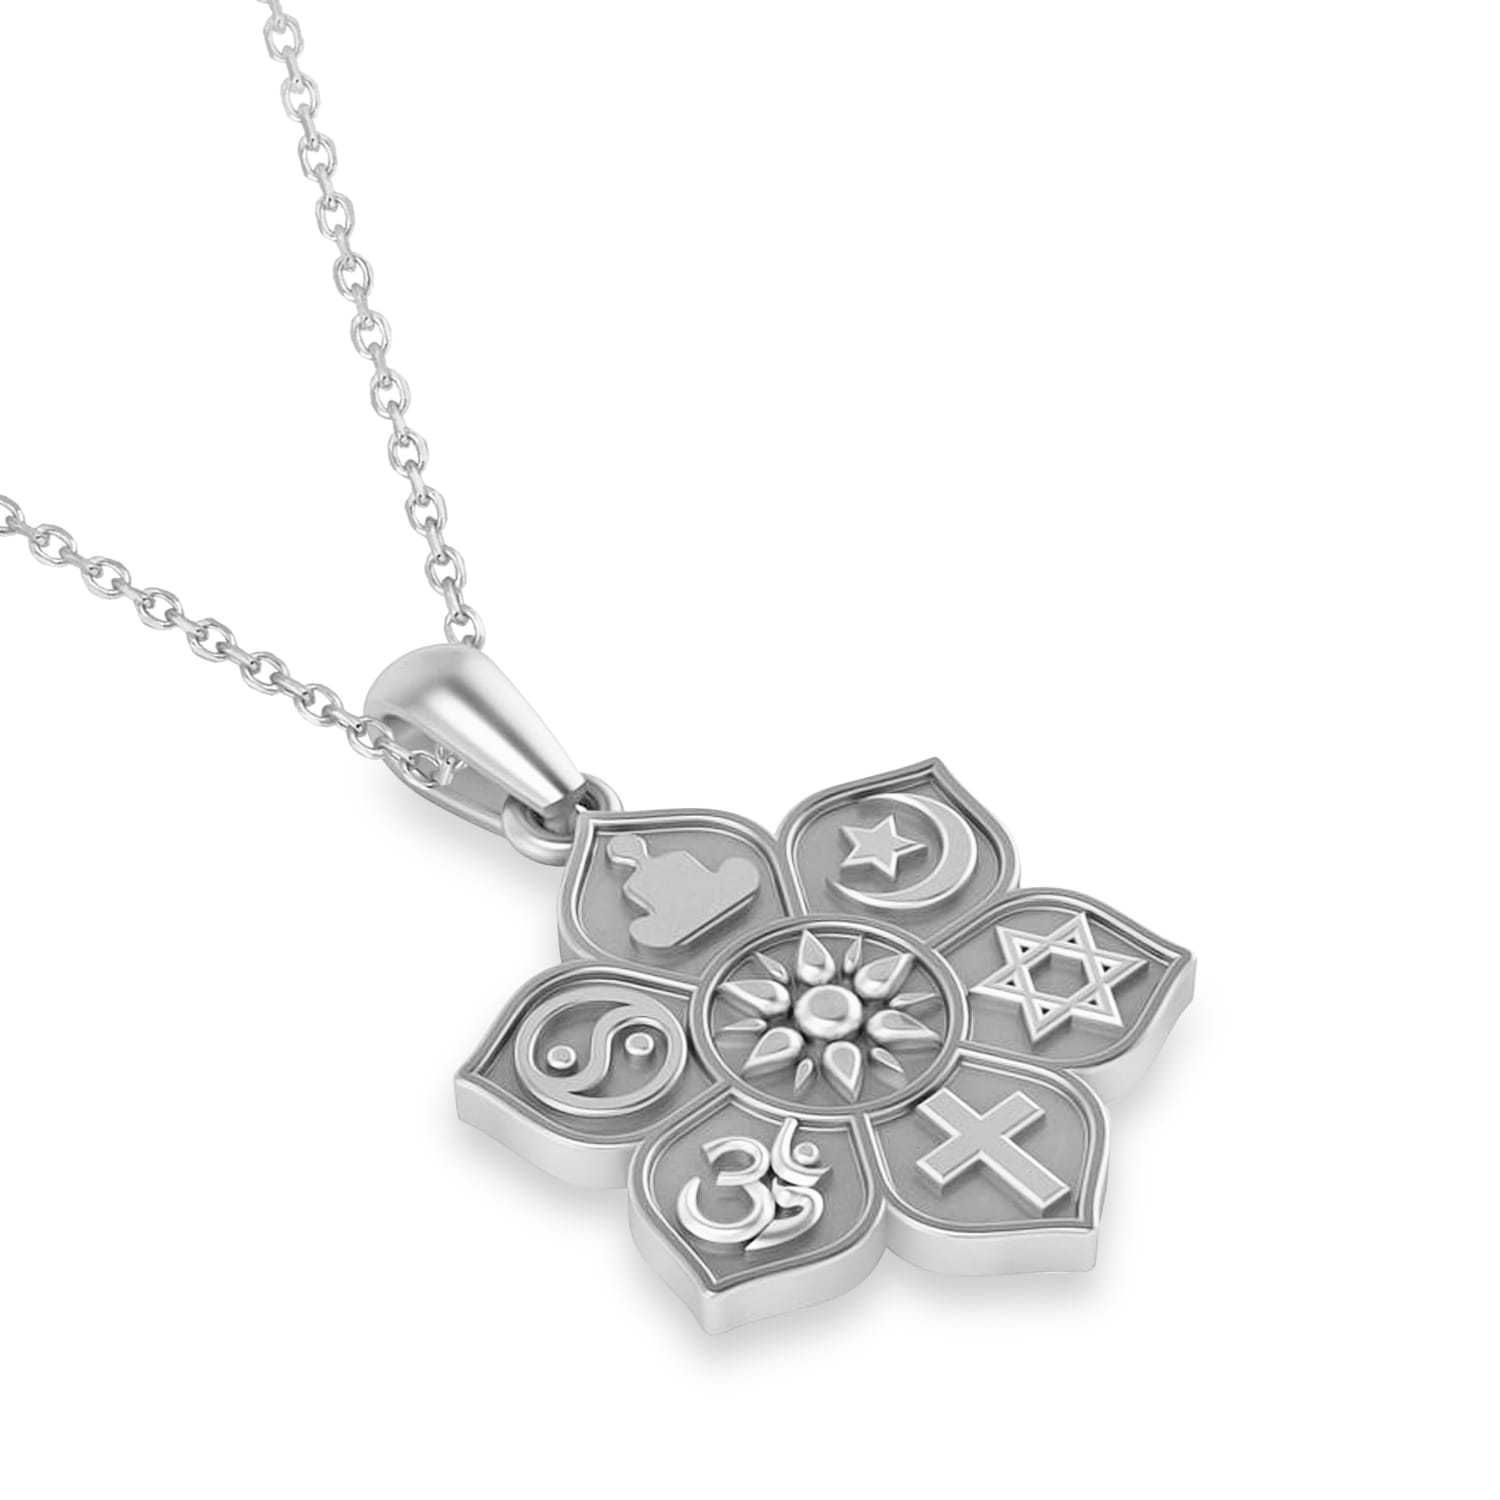 Coexist Symbols on Lotus Flower Pendant Necklace 14k White Gold